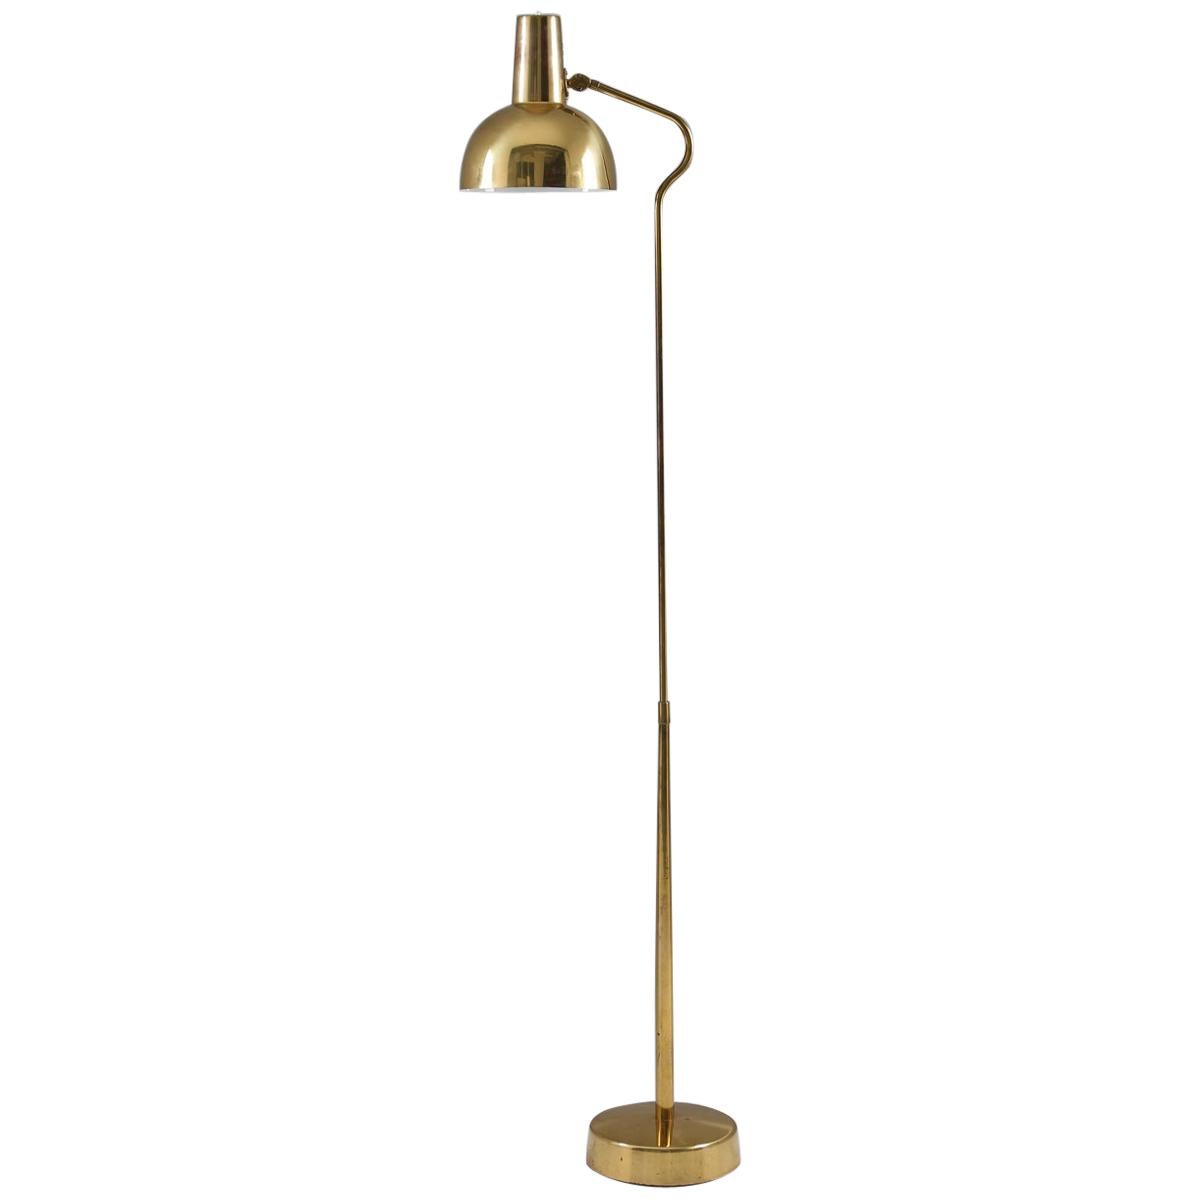 Swedish Modern Midcentury Floor Lamp in Brass by ASEA, 1960s